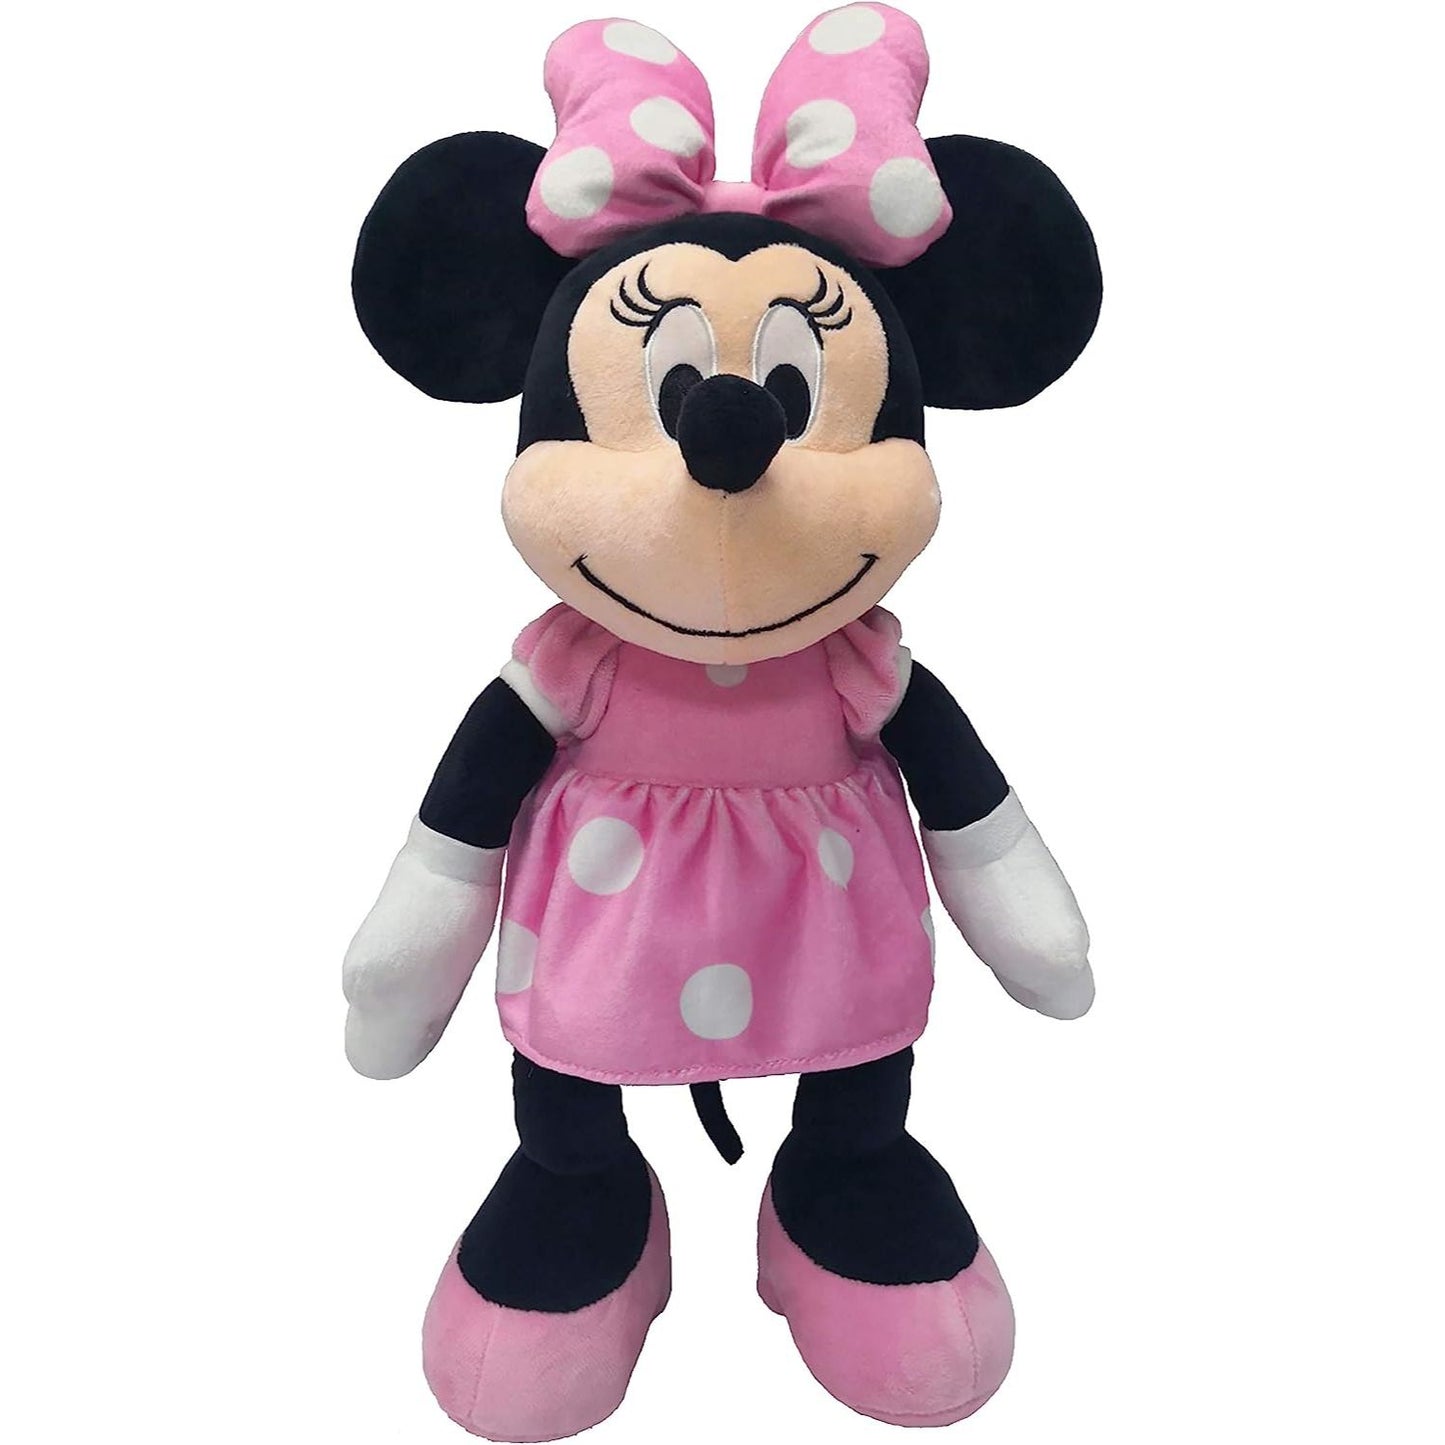 Disney - Minnie Mouse 18 Inch Plush Toy (46 cm) - Heretoserveyou